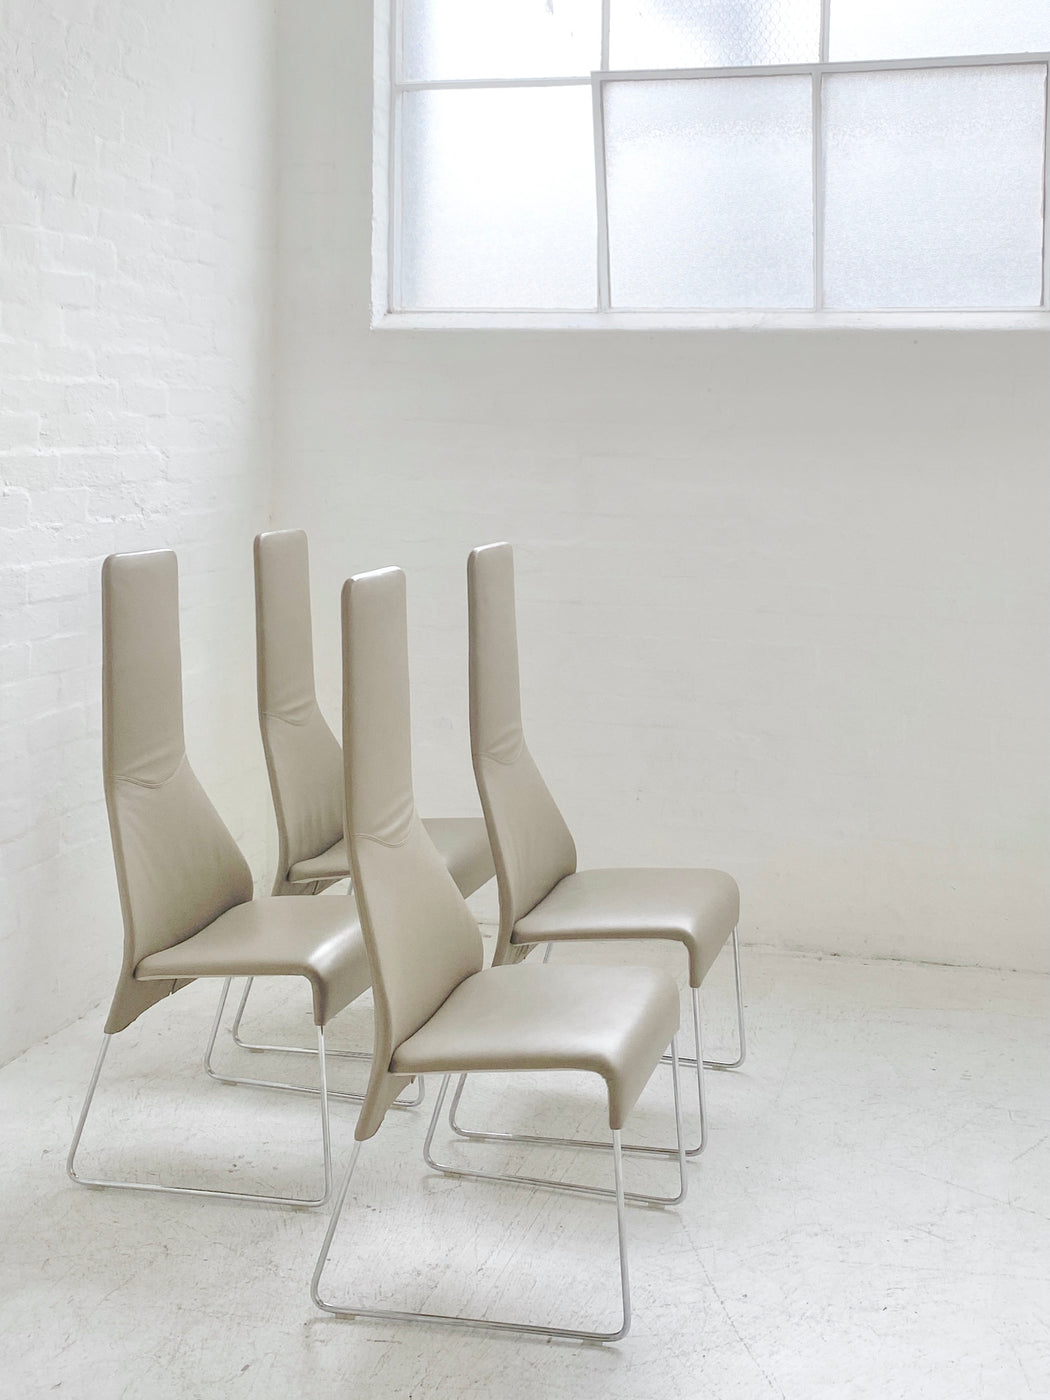 Patricia Urquiola 'Lazy '05' Chairs